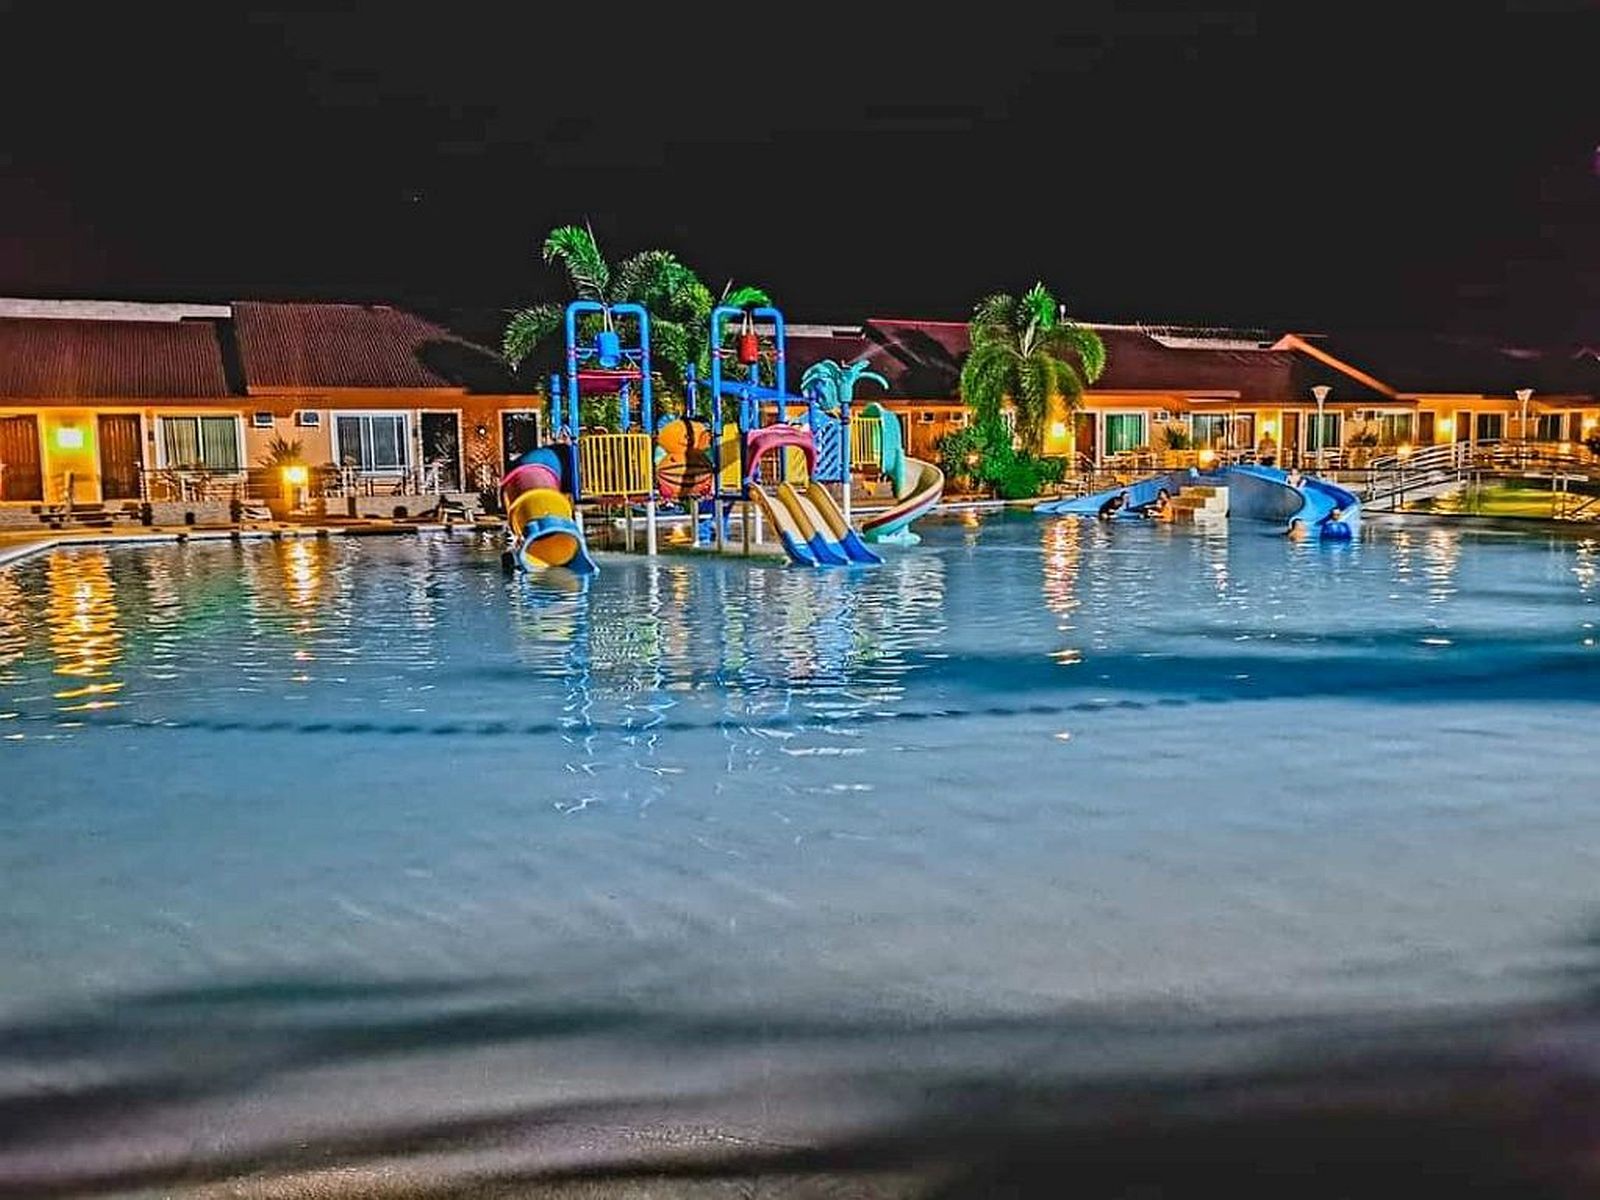 PHILIPPINEN BLOG - Sonnenuntergang-Beobachtung im Amontay Beach Resort in Nasipit